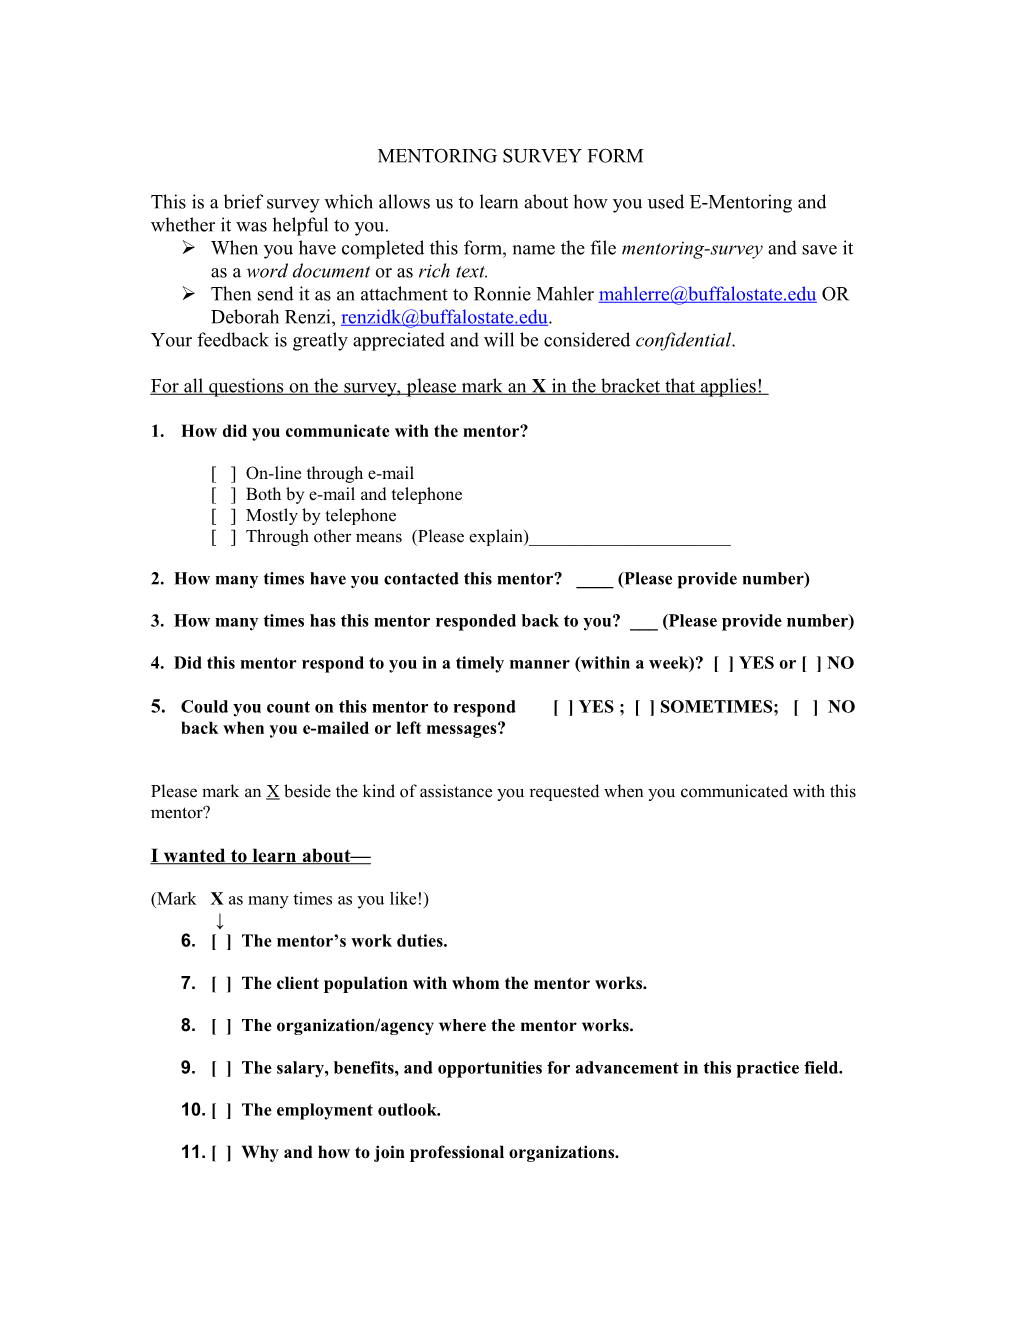 Mentoring Survey Form